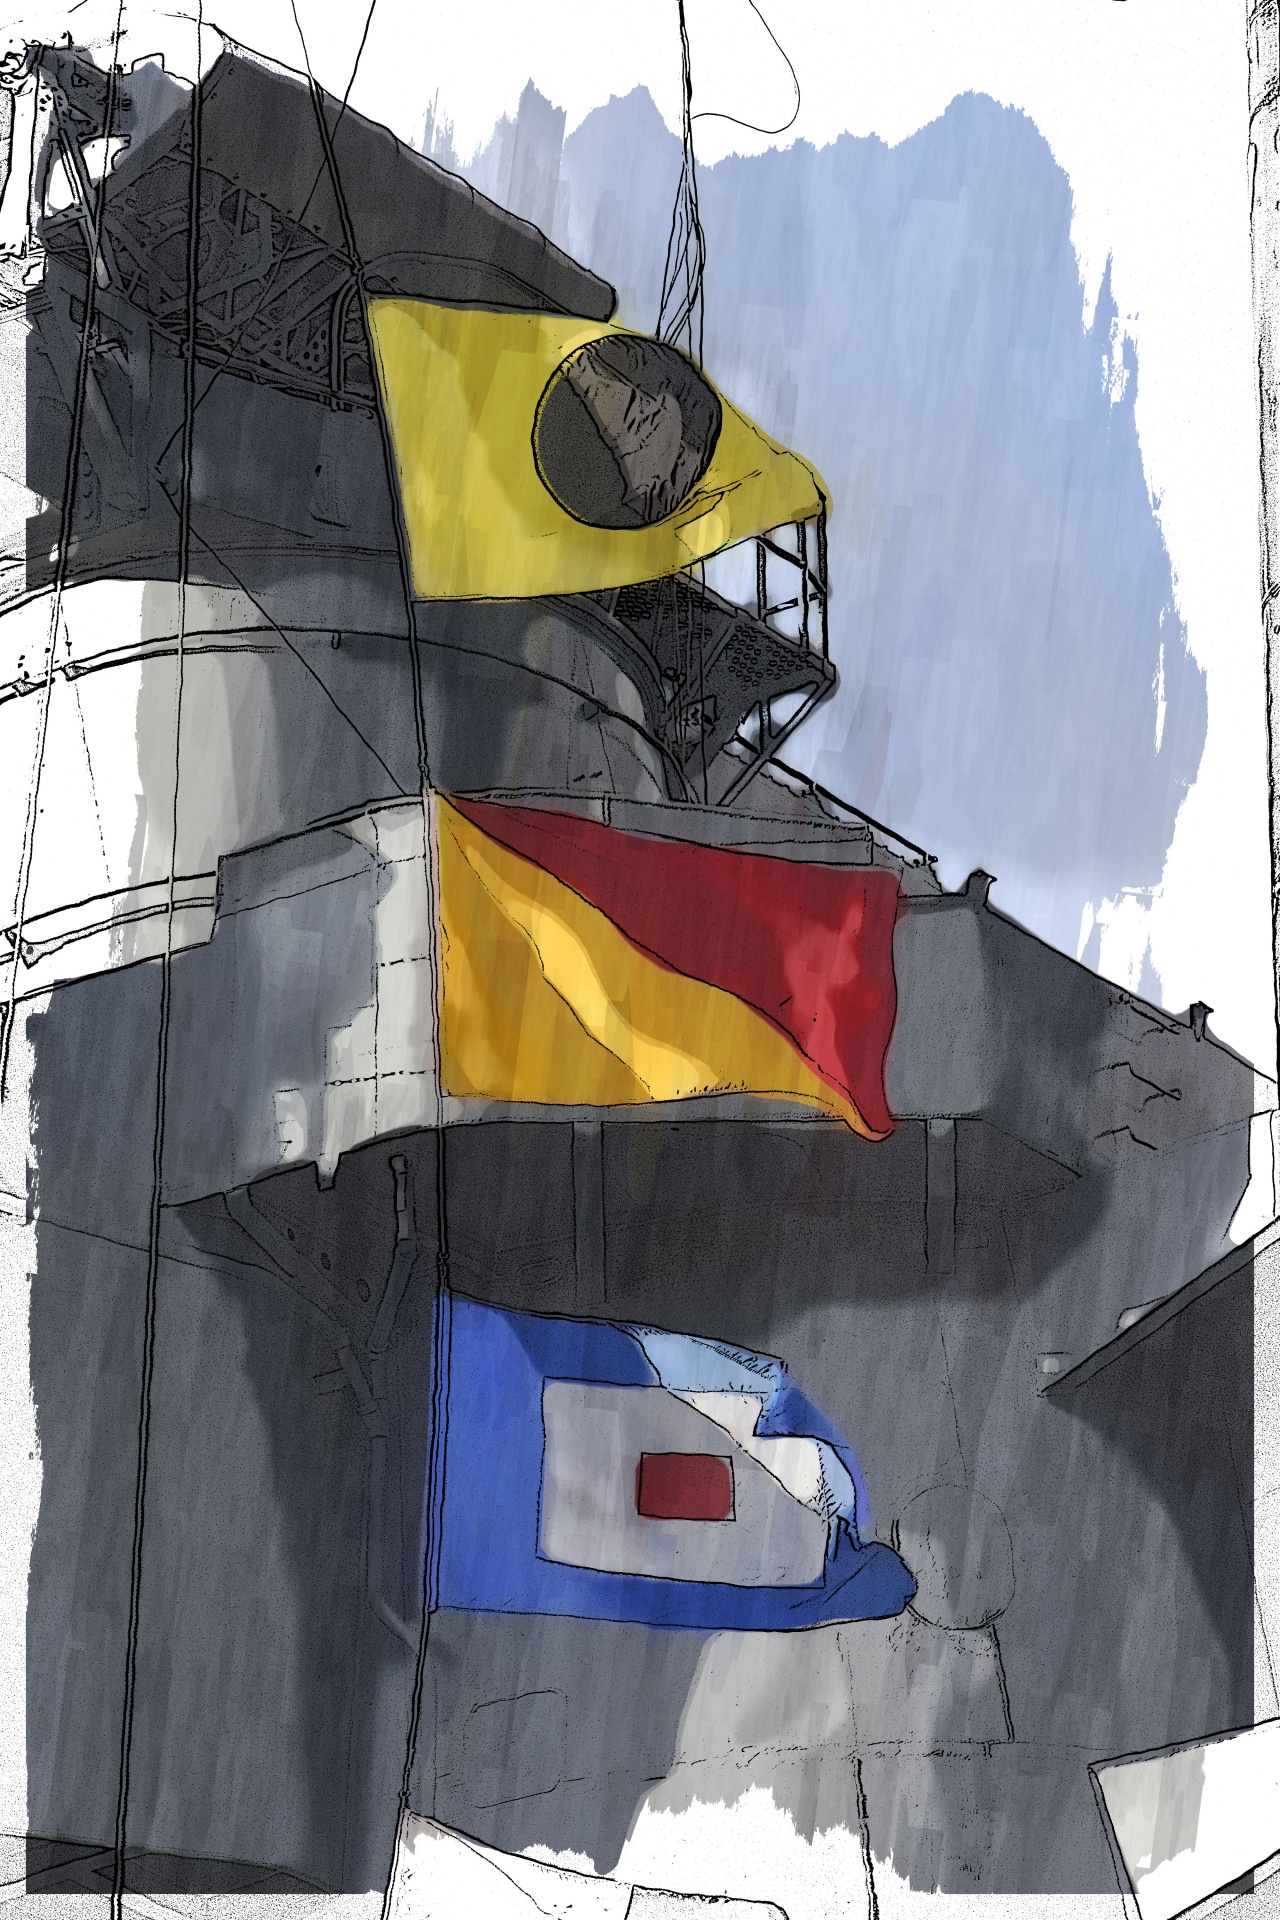 artistic rendering of Nautical flags on the historic Battleship Iowa retired in San Pedro, California